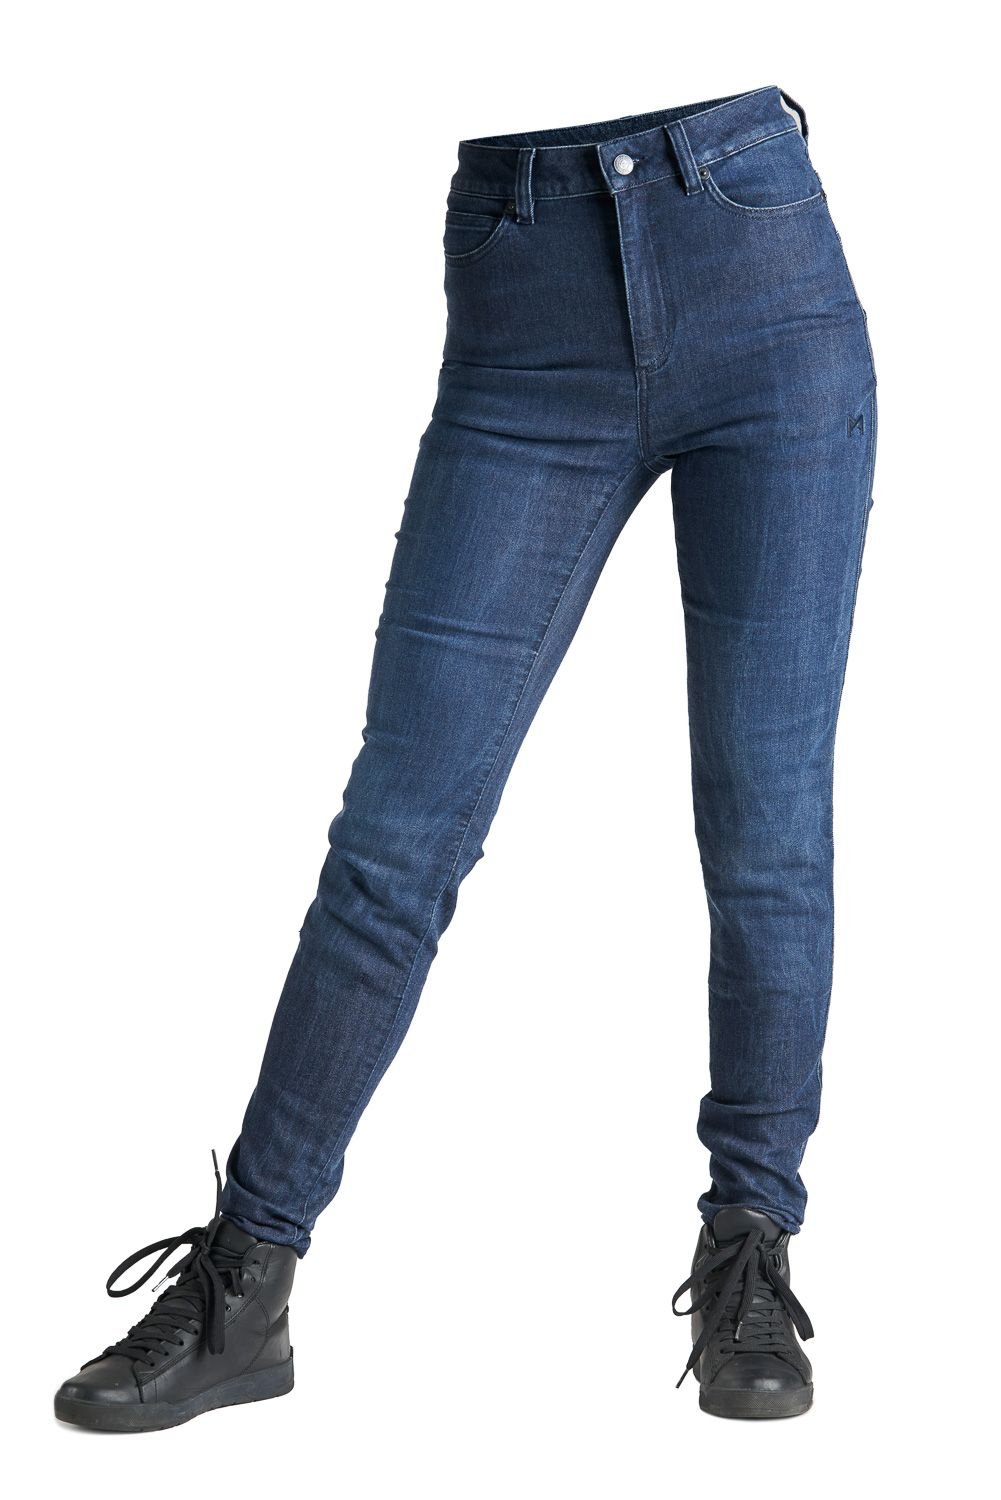 Image of Pando Moto Kusari Cor 02 Women Motorcycle Jeans Skinny-Fit Cordura Talla W29/L30